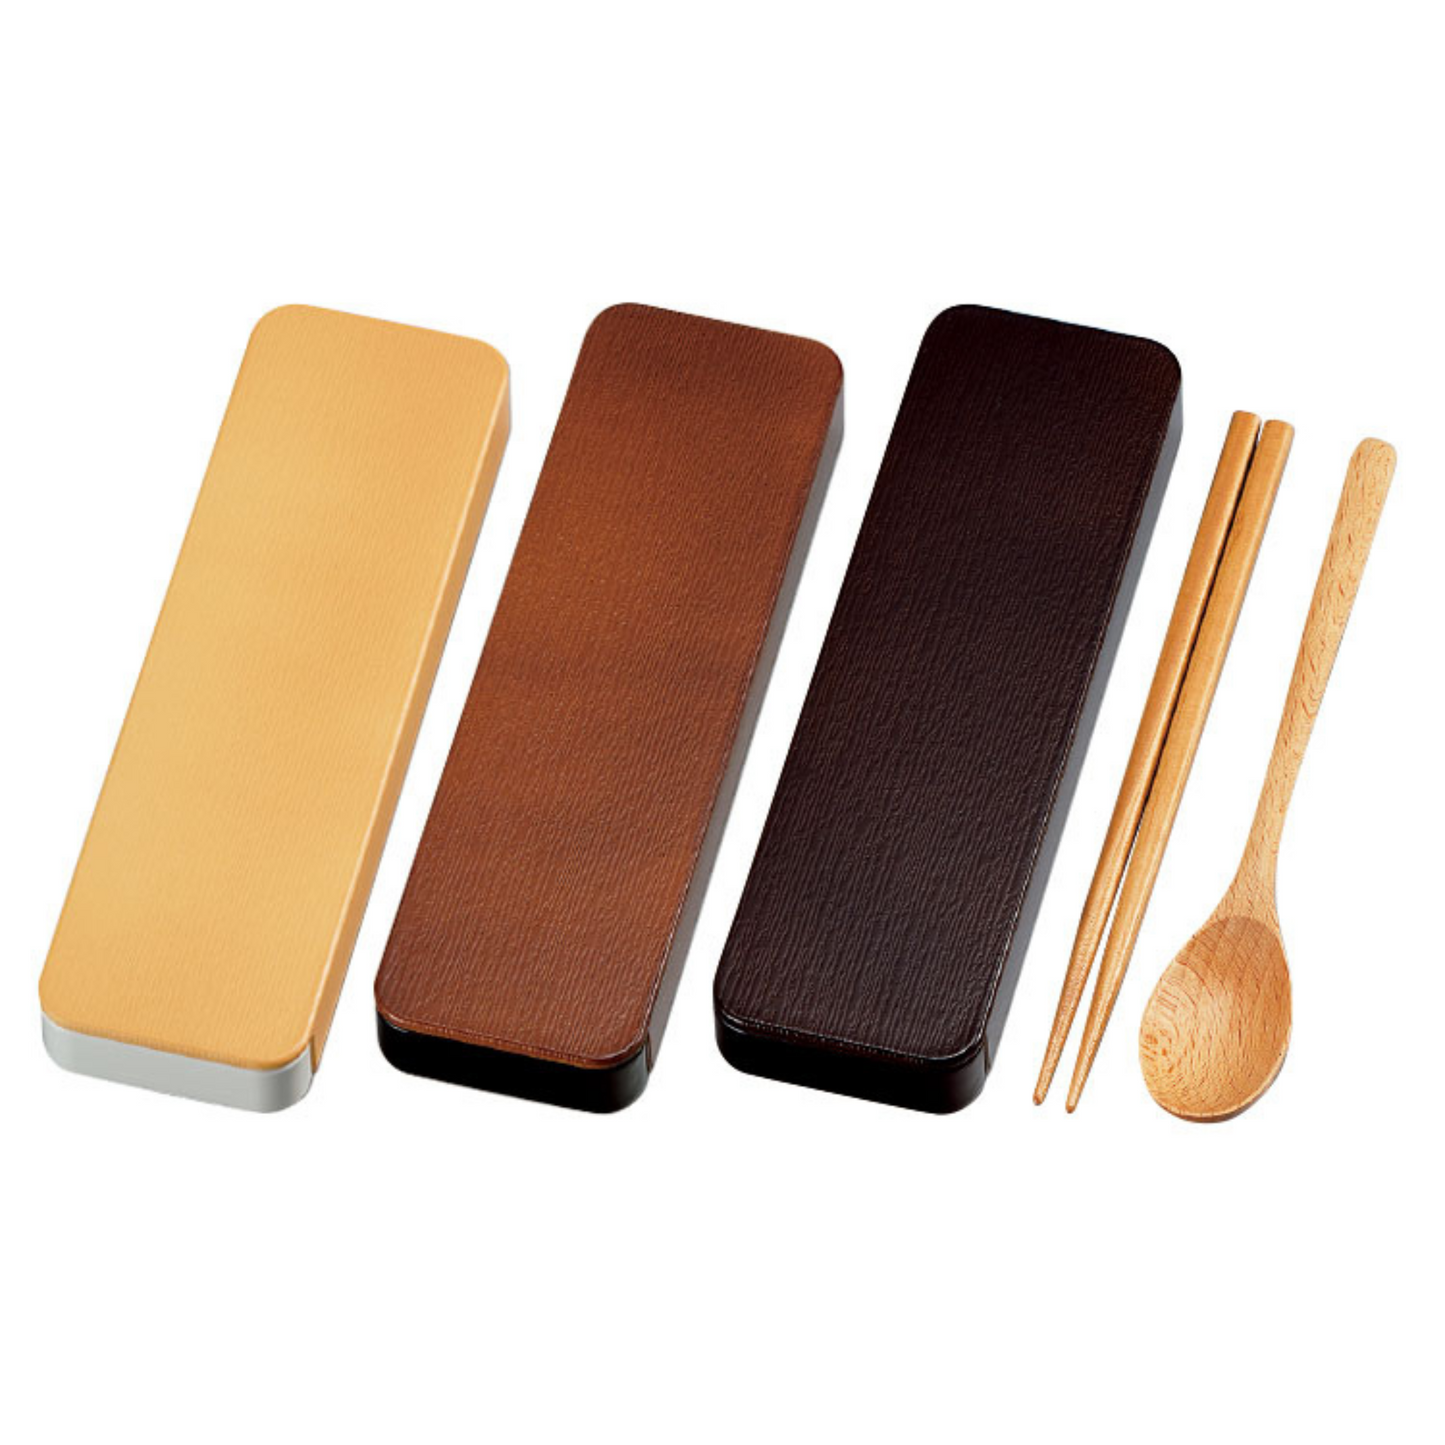 Wooden Chopstick and Spoon Set | Beige